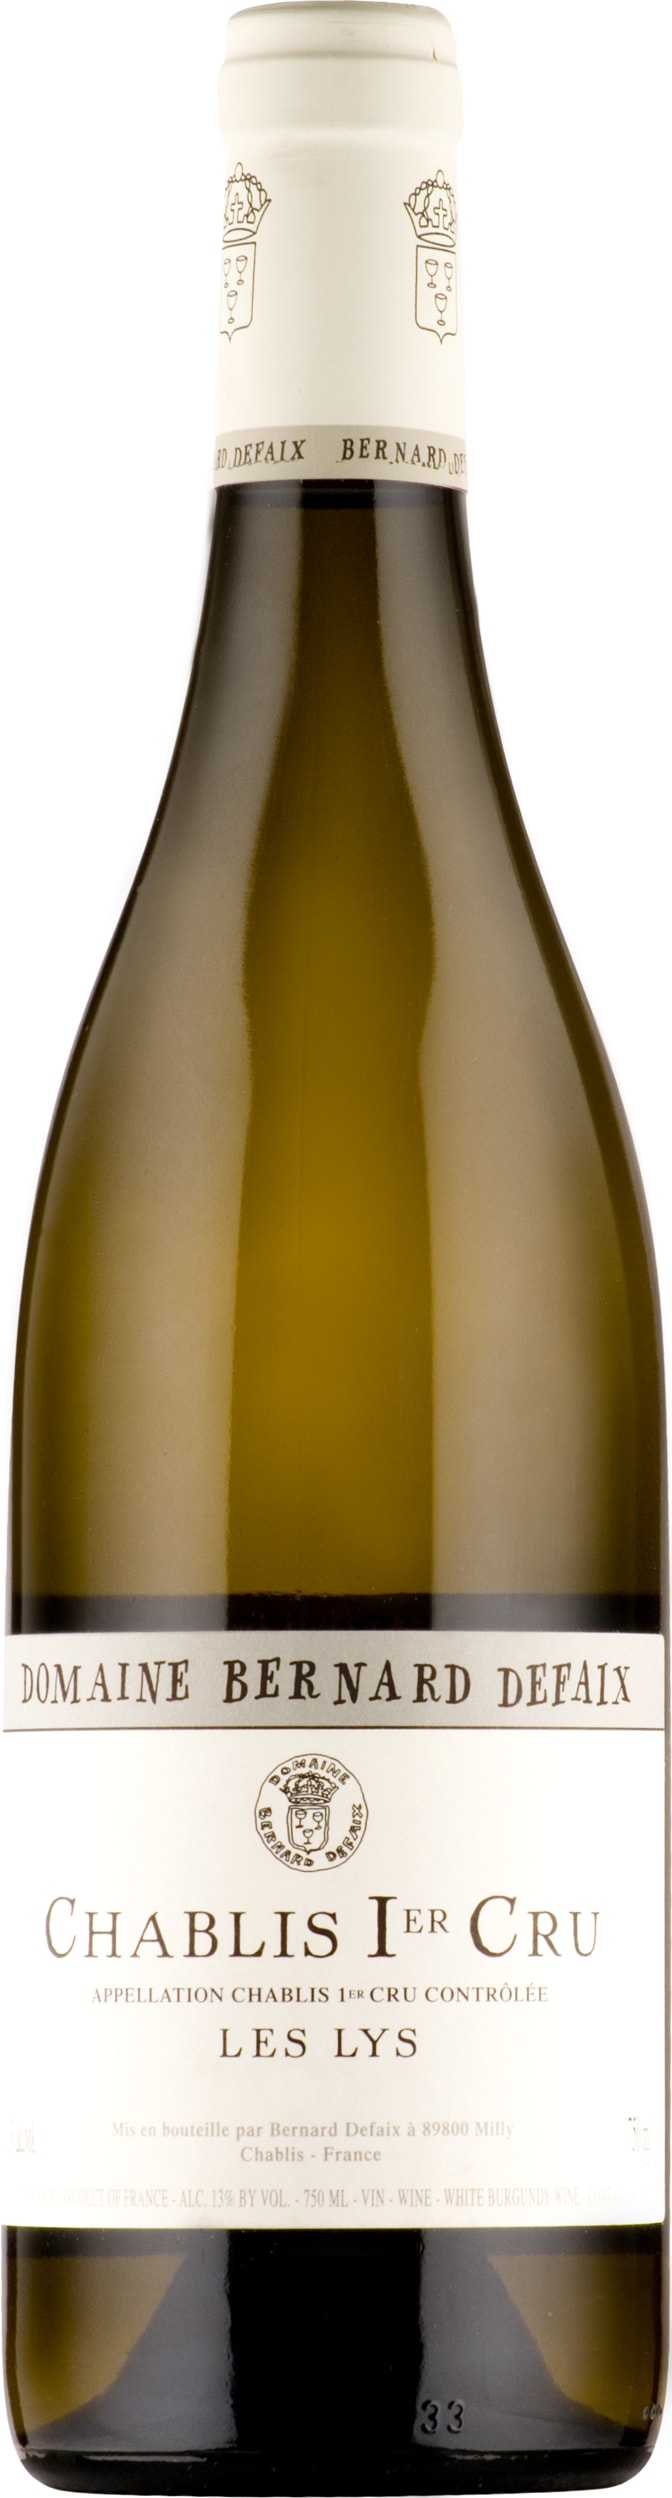 Bernard Defaix Chablis Premier Cru Les Lys 2021 75cl - Buy Bernard Defaix Wines from GREAT WINES DIRECT wine shop